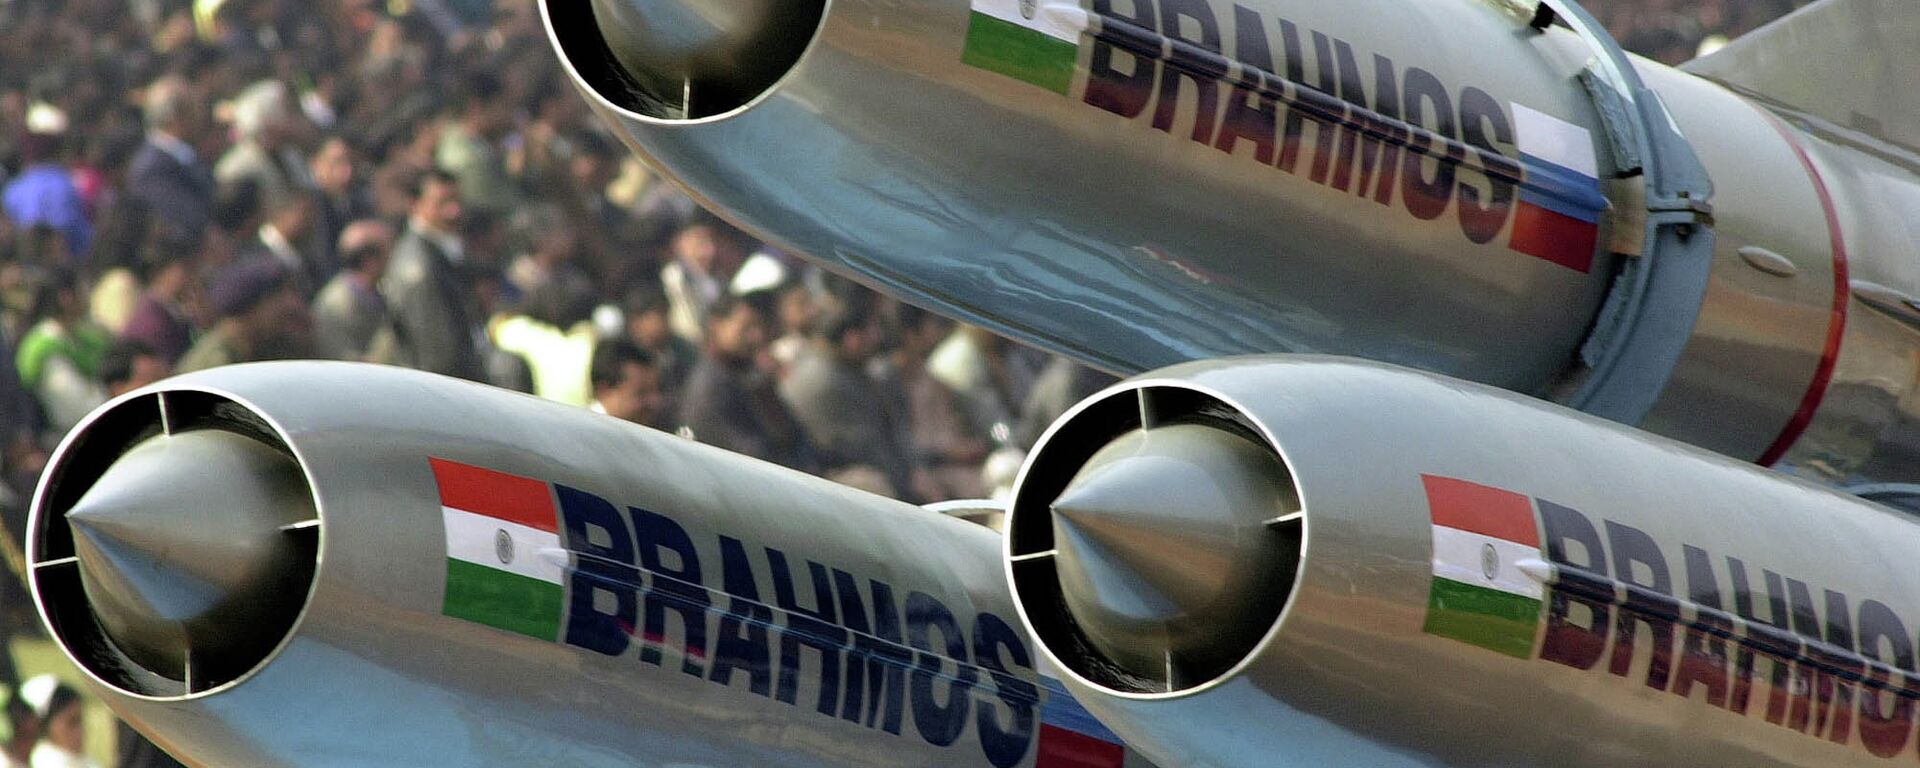 India's supersonic Brahmos cruise missiles - Sputnik International, 1920, 23.12.2019